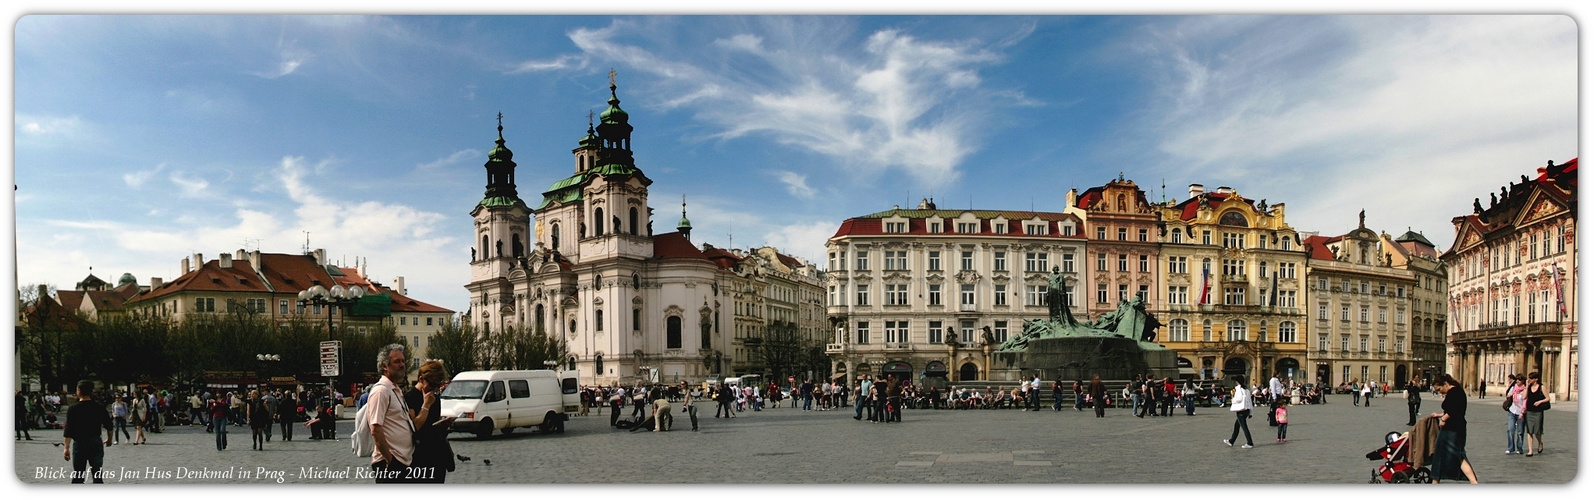 Blick auf das Jan Hus Denkmal in Prag 2011